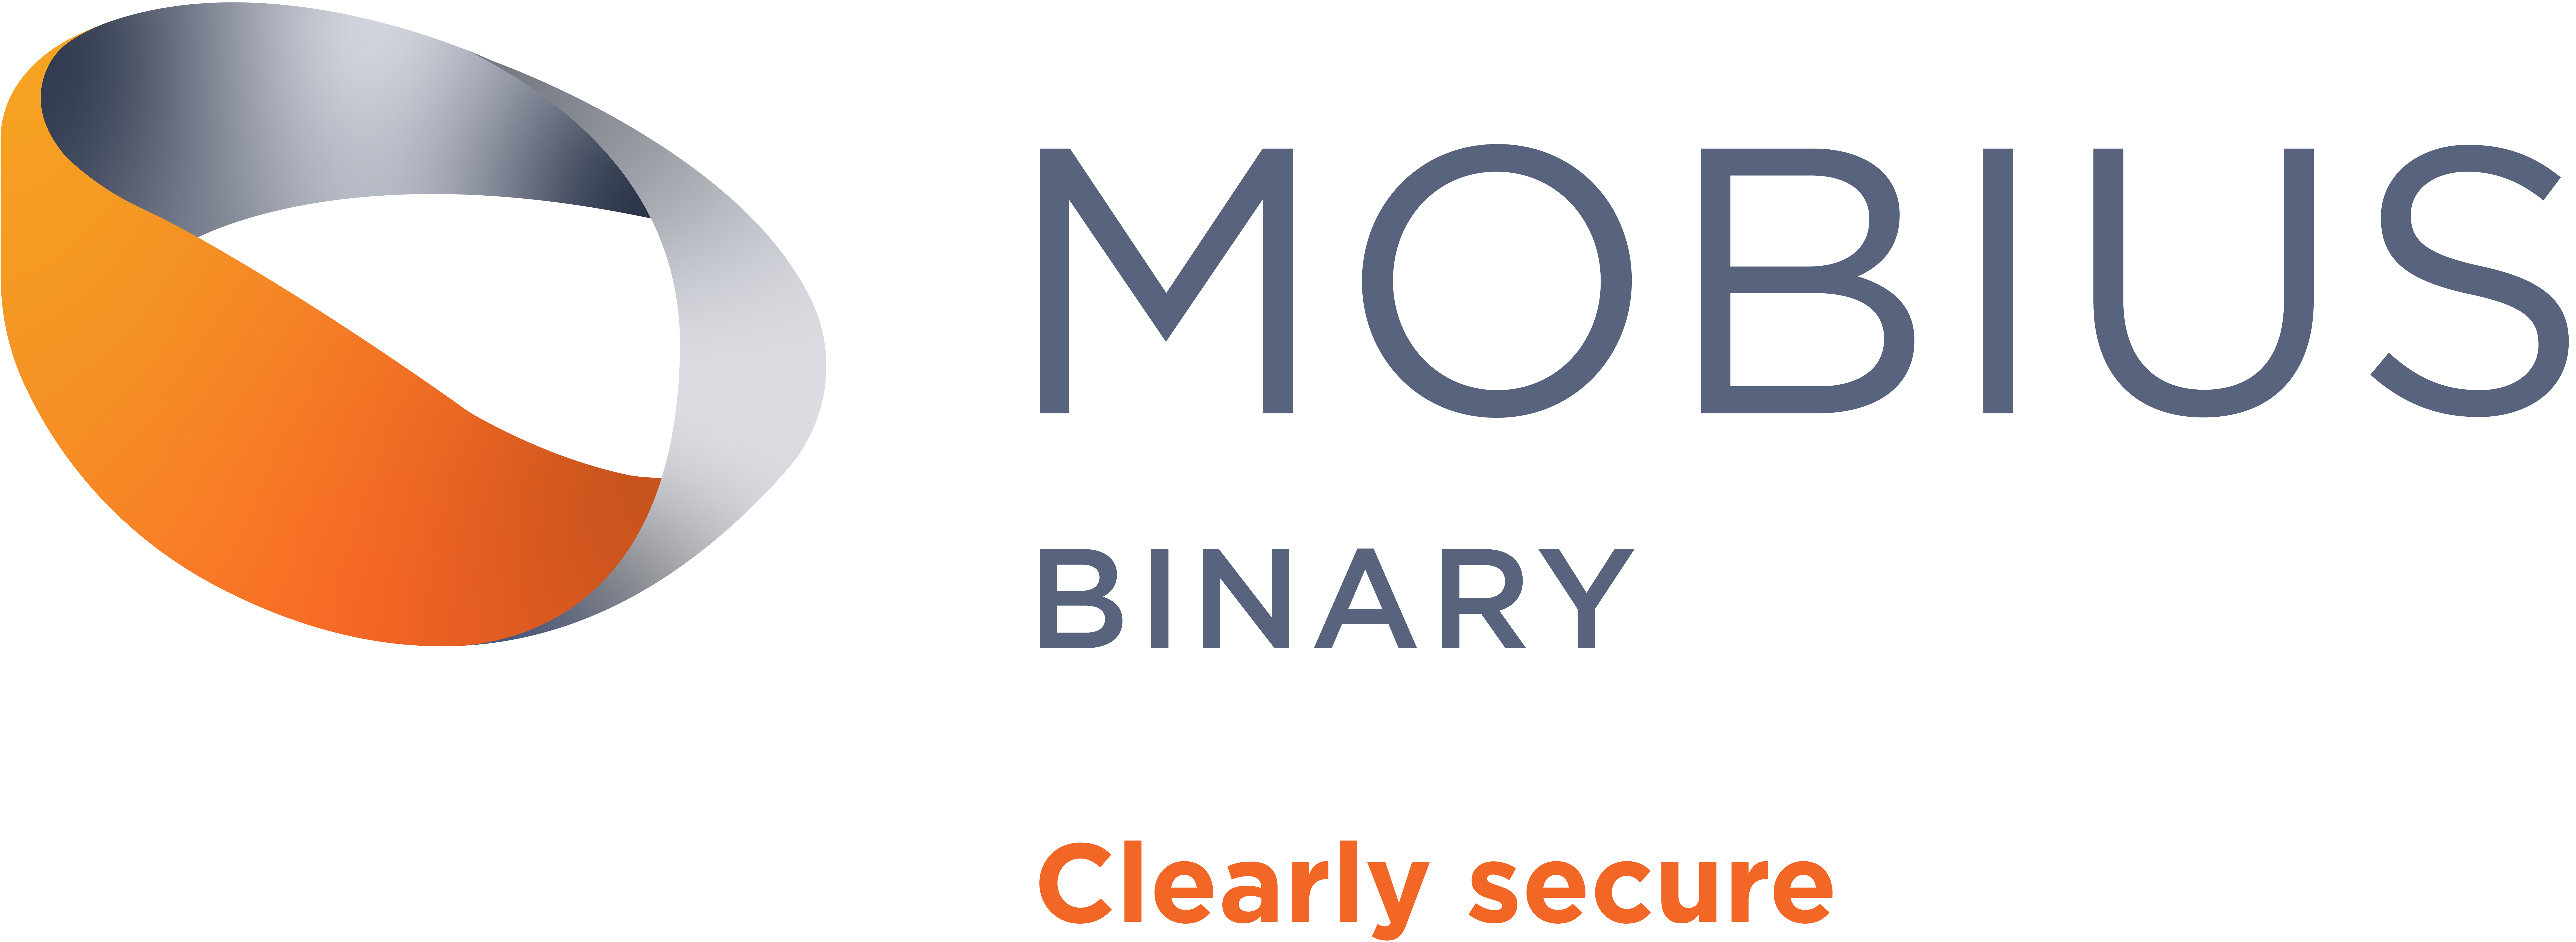 Mobius Binary